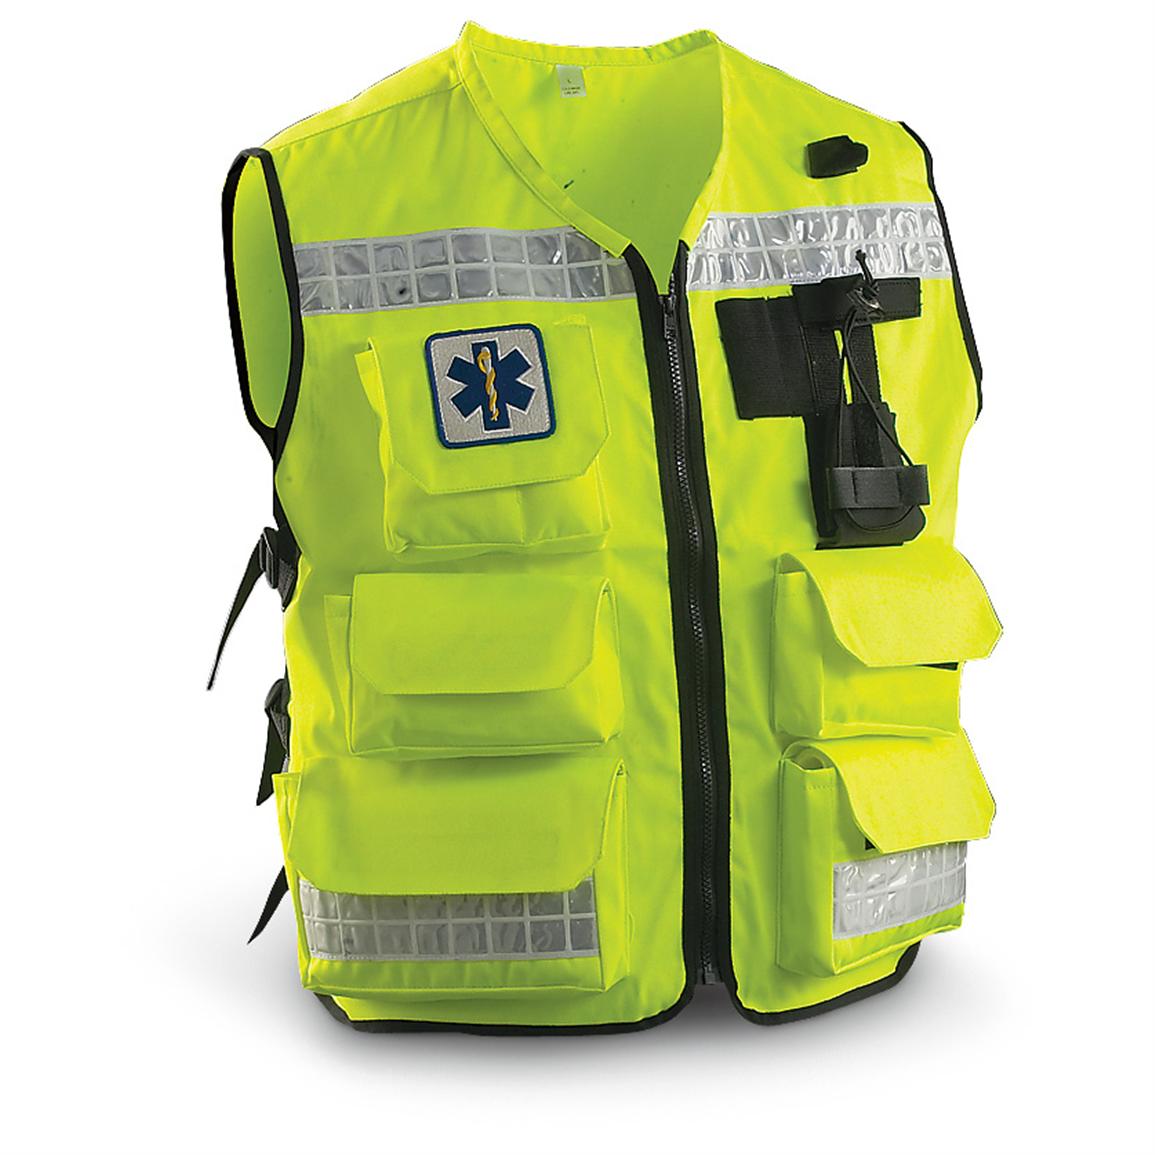 ems vest with pockets - eleetshop.com